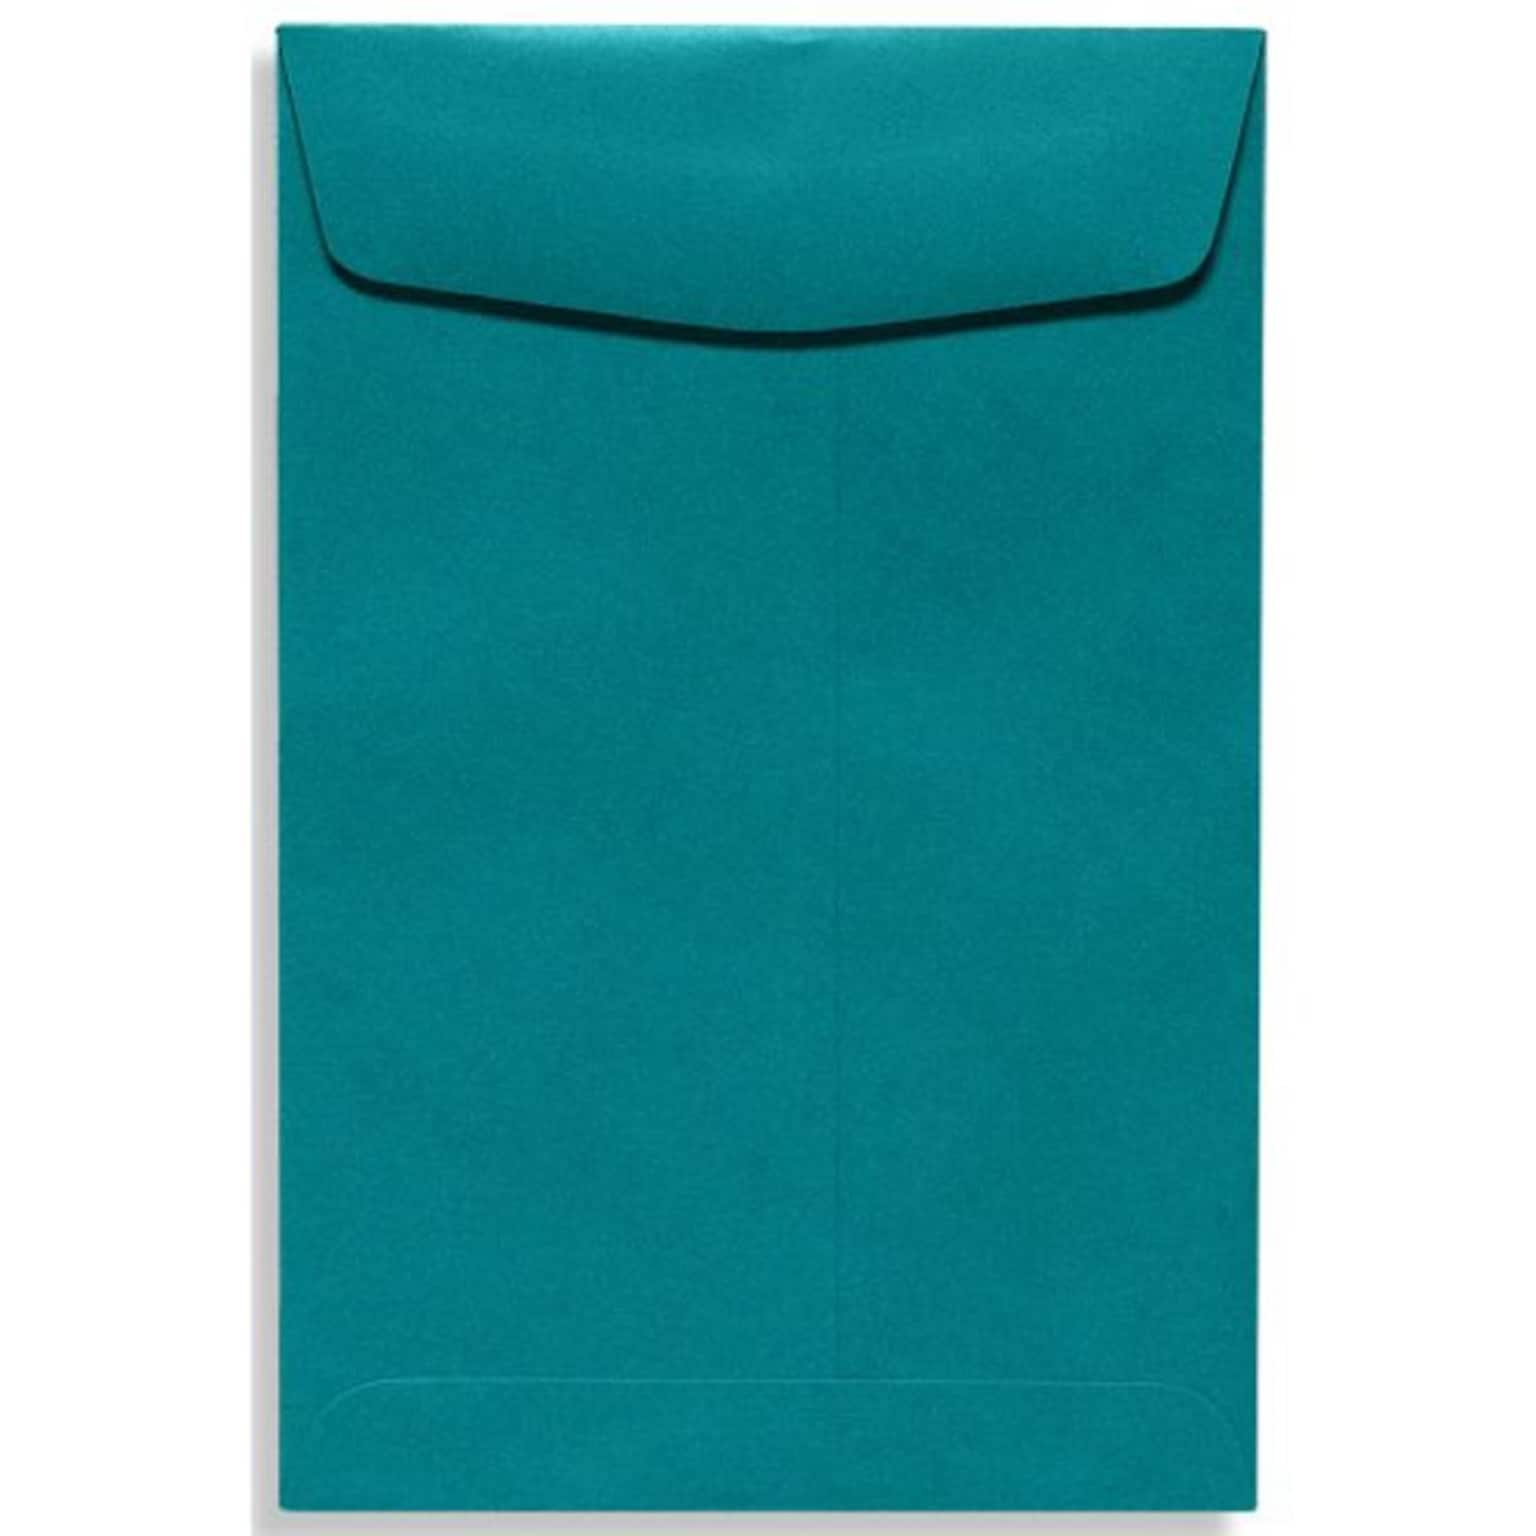 LUX® 70lbs. 9 x 12 Open End Envelopes W/Glue, Teal Blue, 250/BX